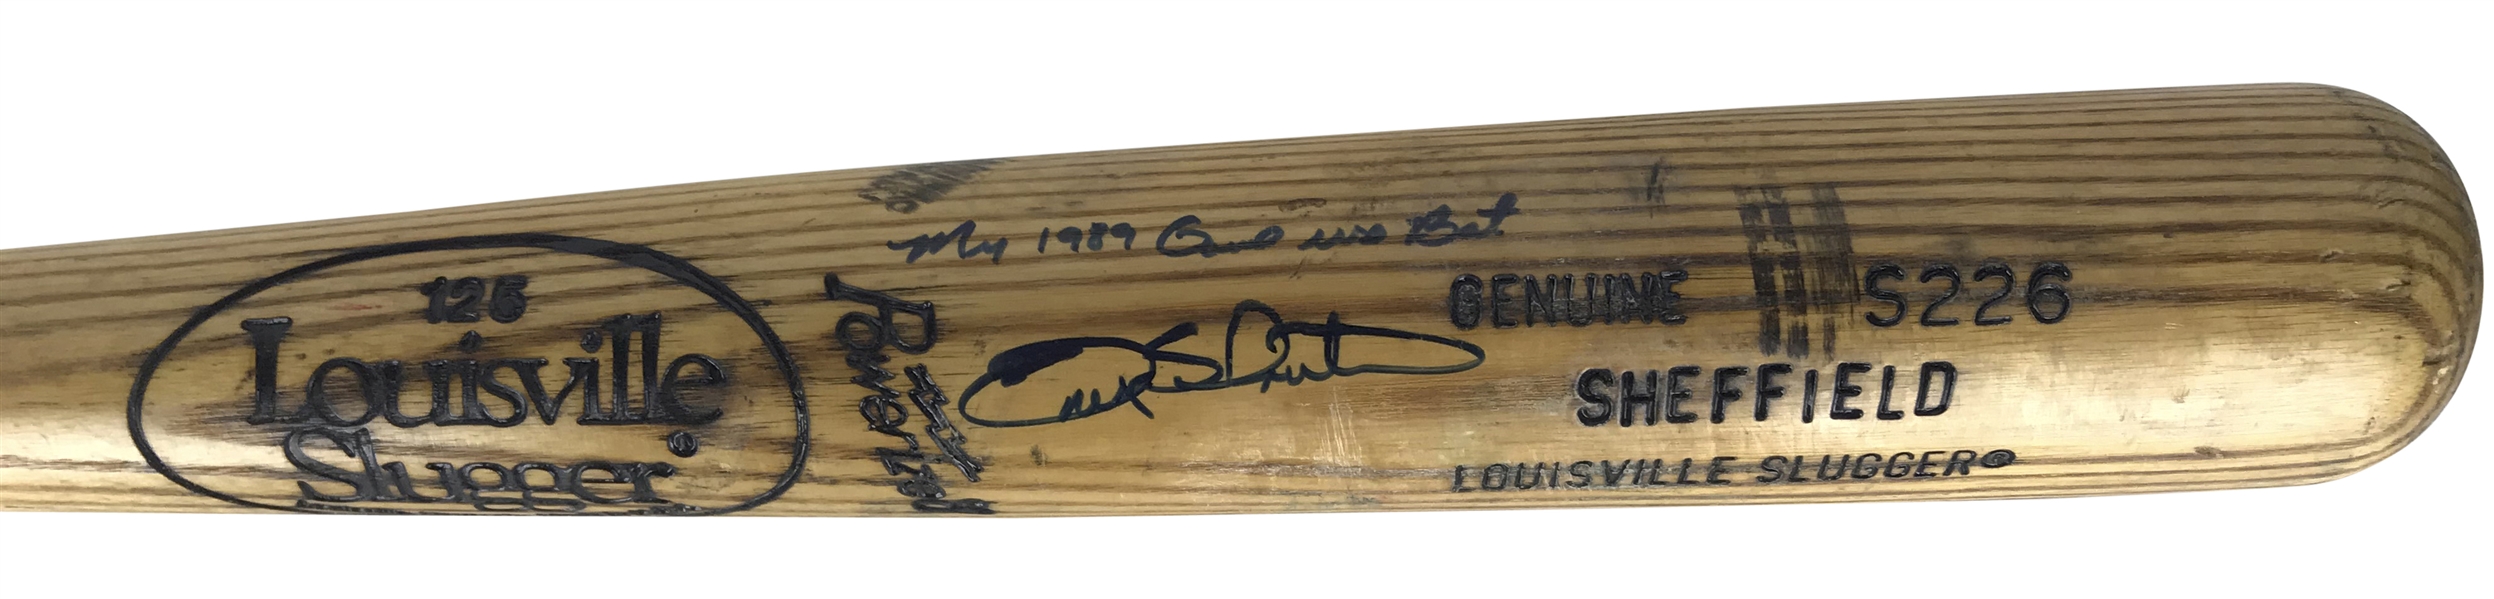 Gary Sheffield Signed & Game Used 1989 S226 Baseball Bat - PSA/DNA GU 9.5!